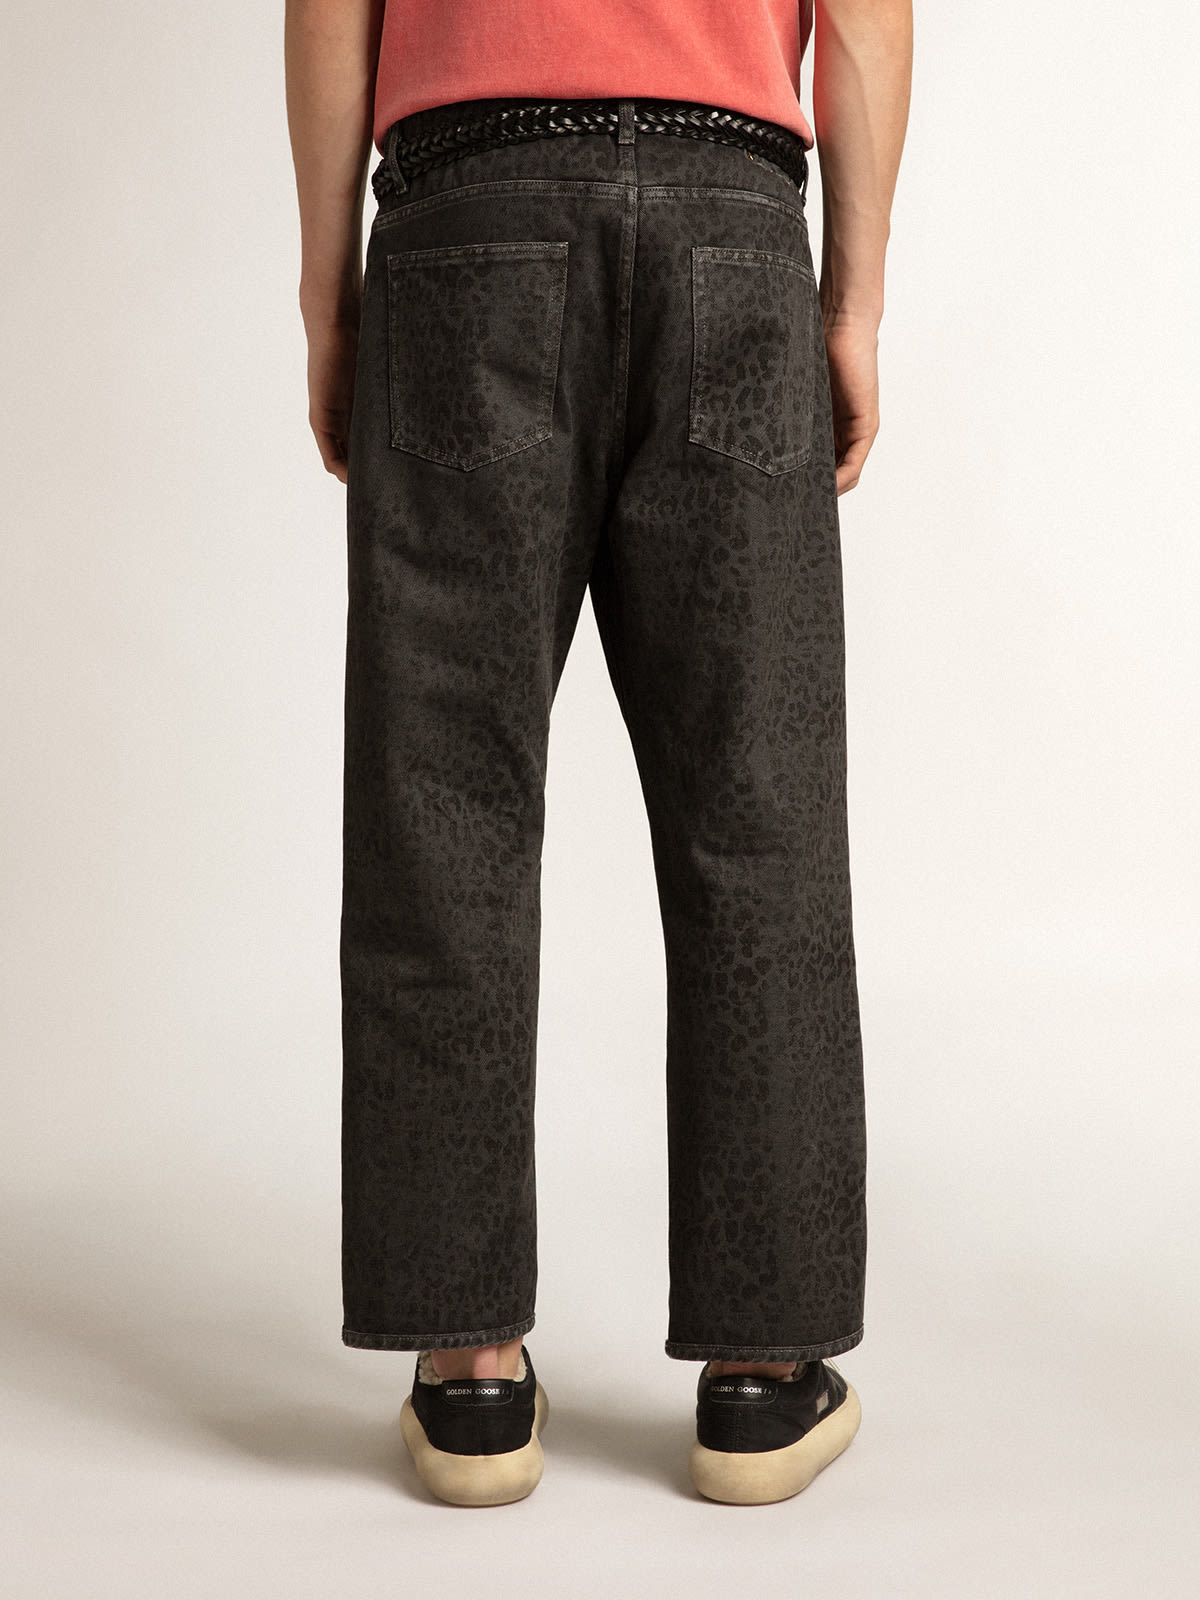 Golden Goose - Calça jeans cinza masculina com estampa de leopardo in 